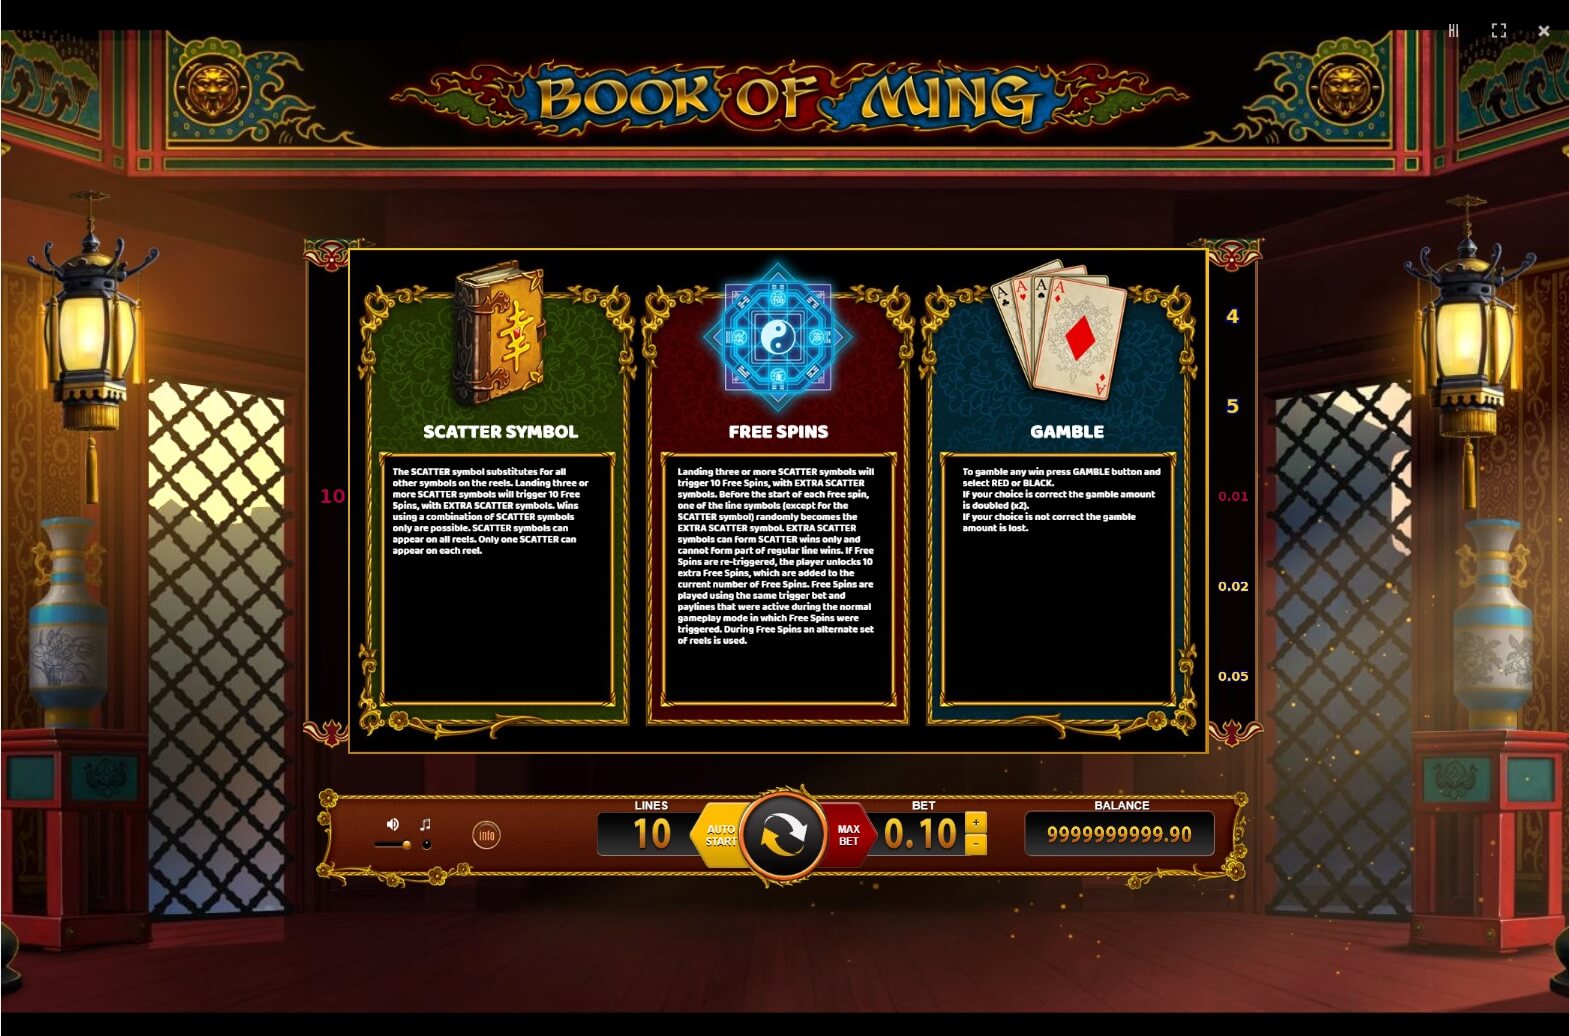 book of ming slot machine detail image 1